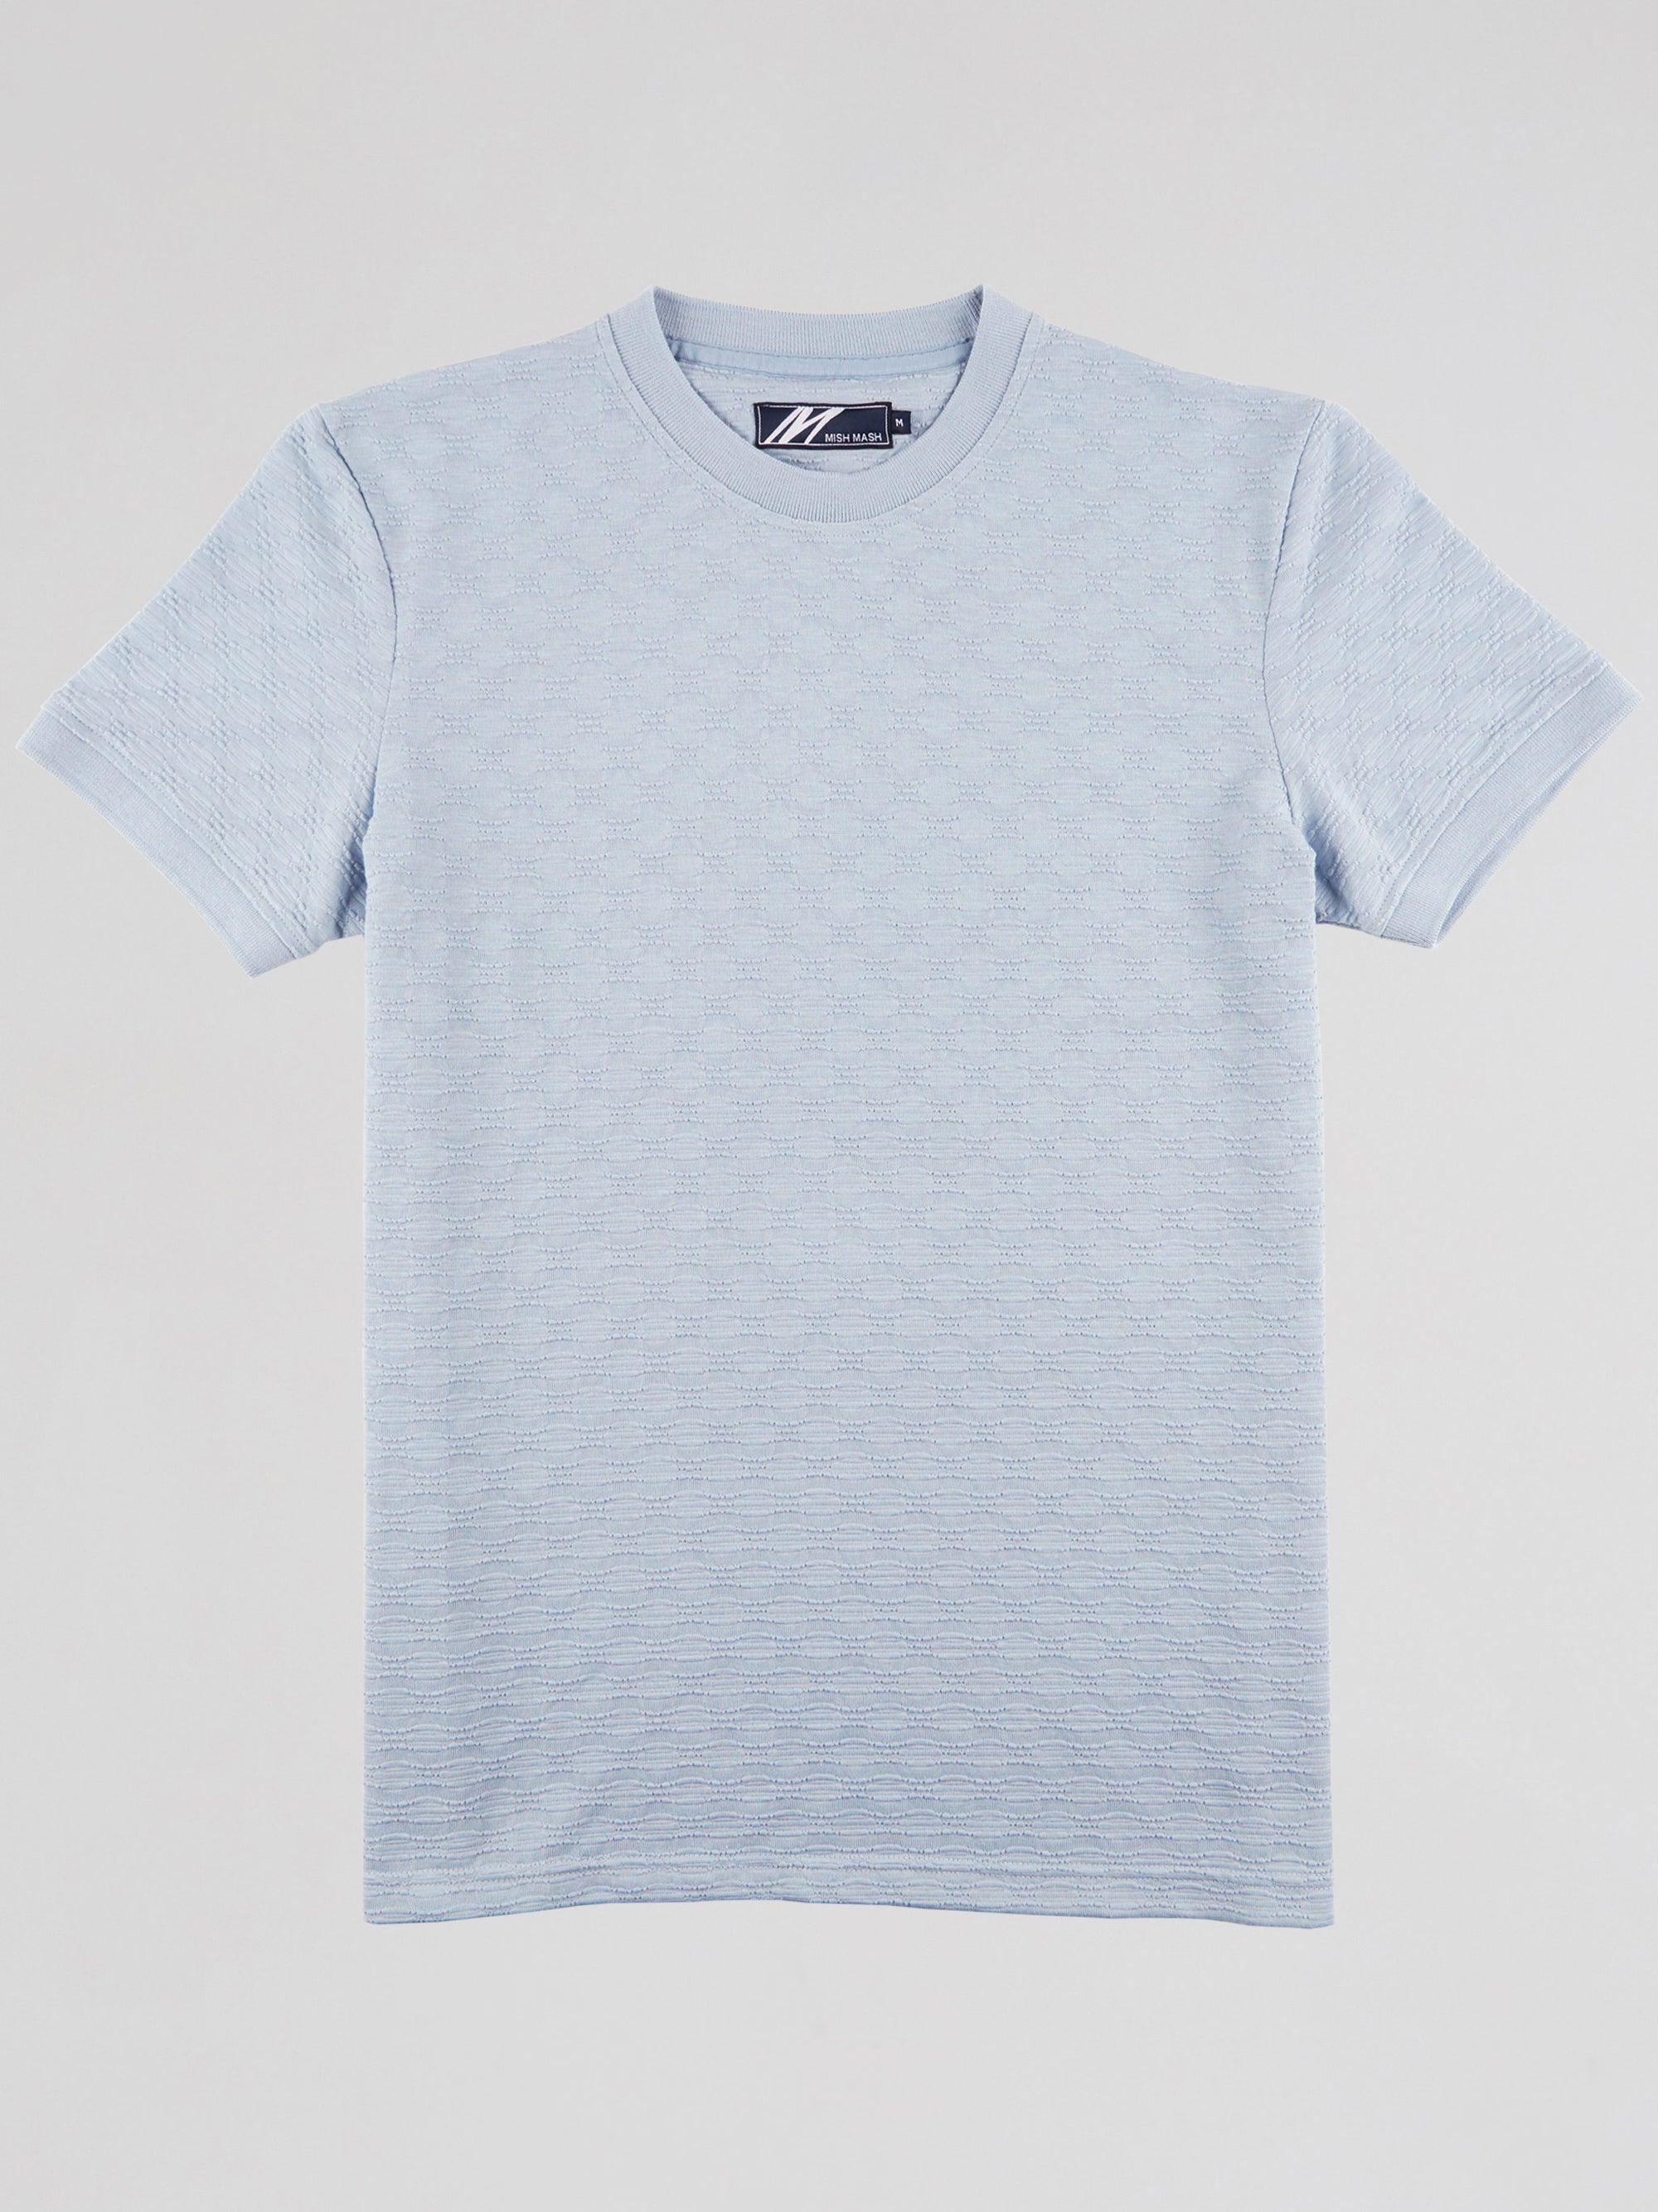 harrier-sky-blue-textured-jersey-mens-basic-short-sleeve-t-shirt-mish-mash